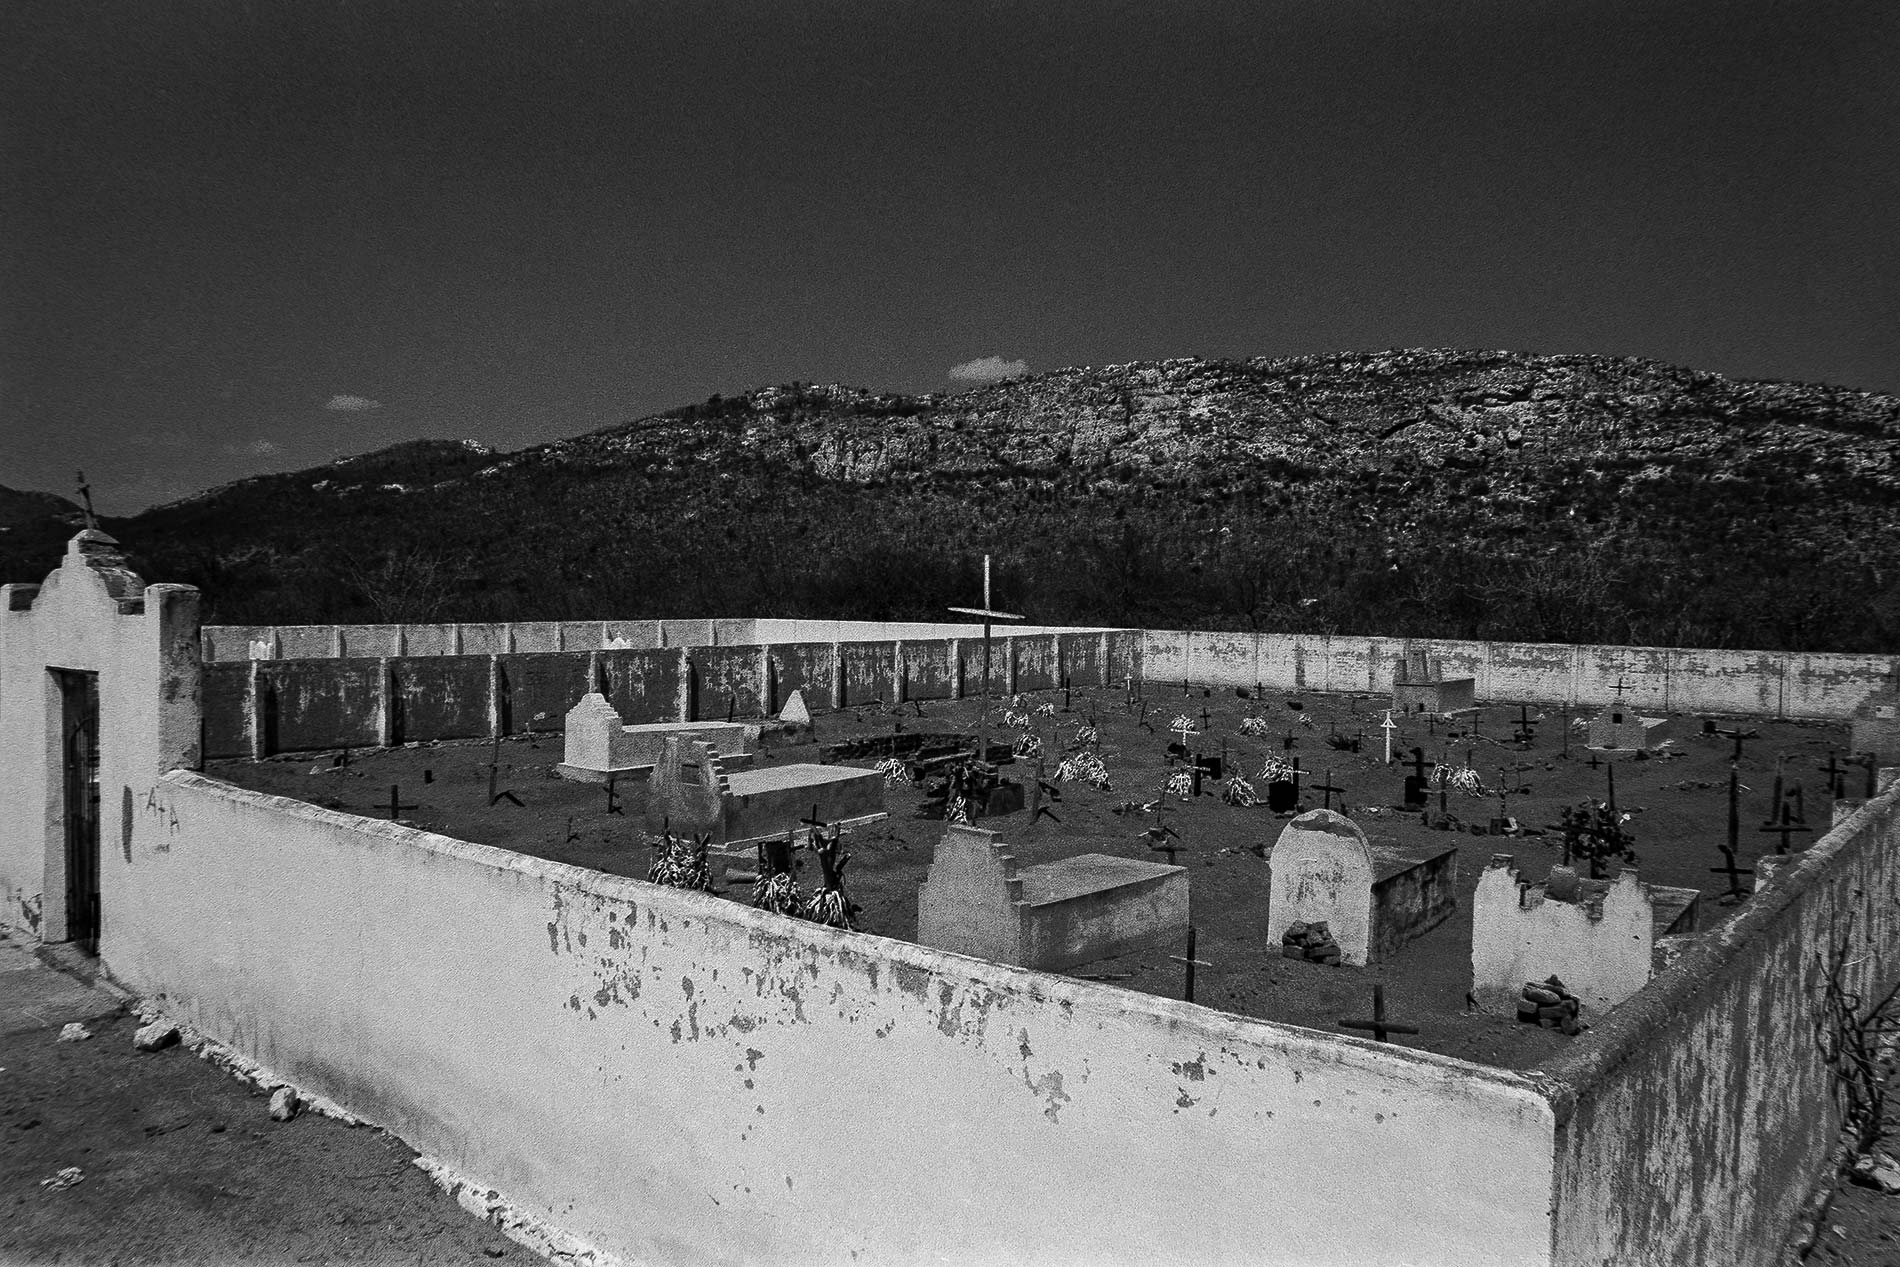 Cemetery rural Brazil drought